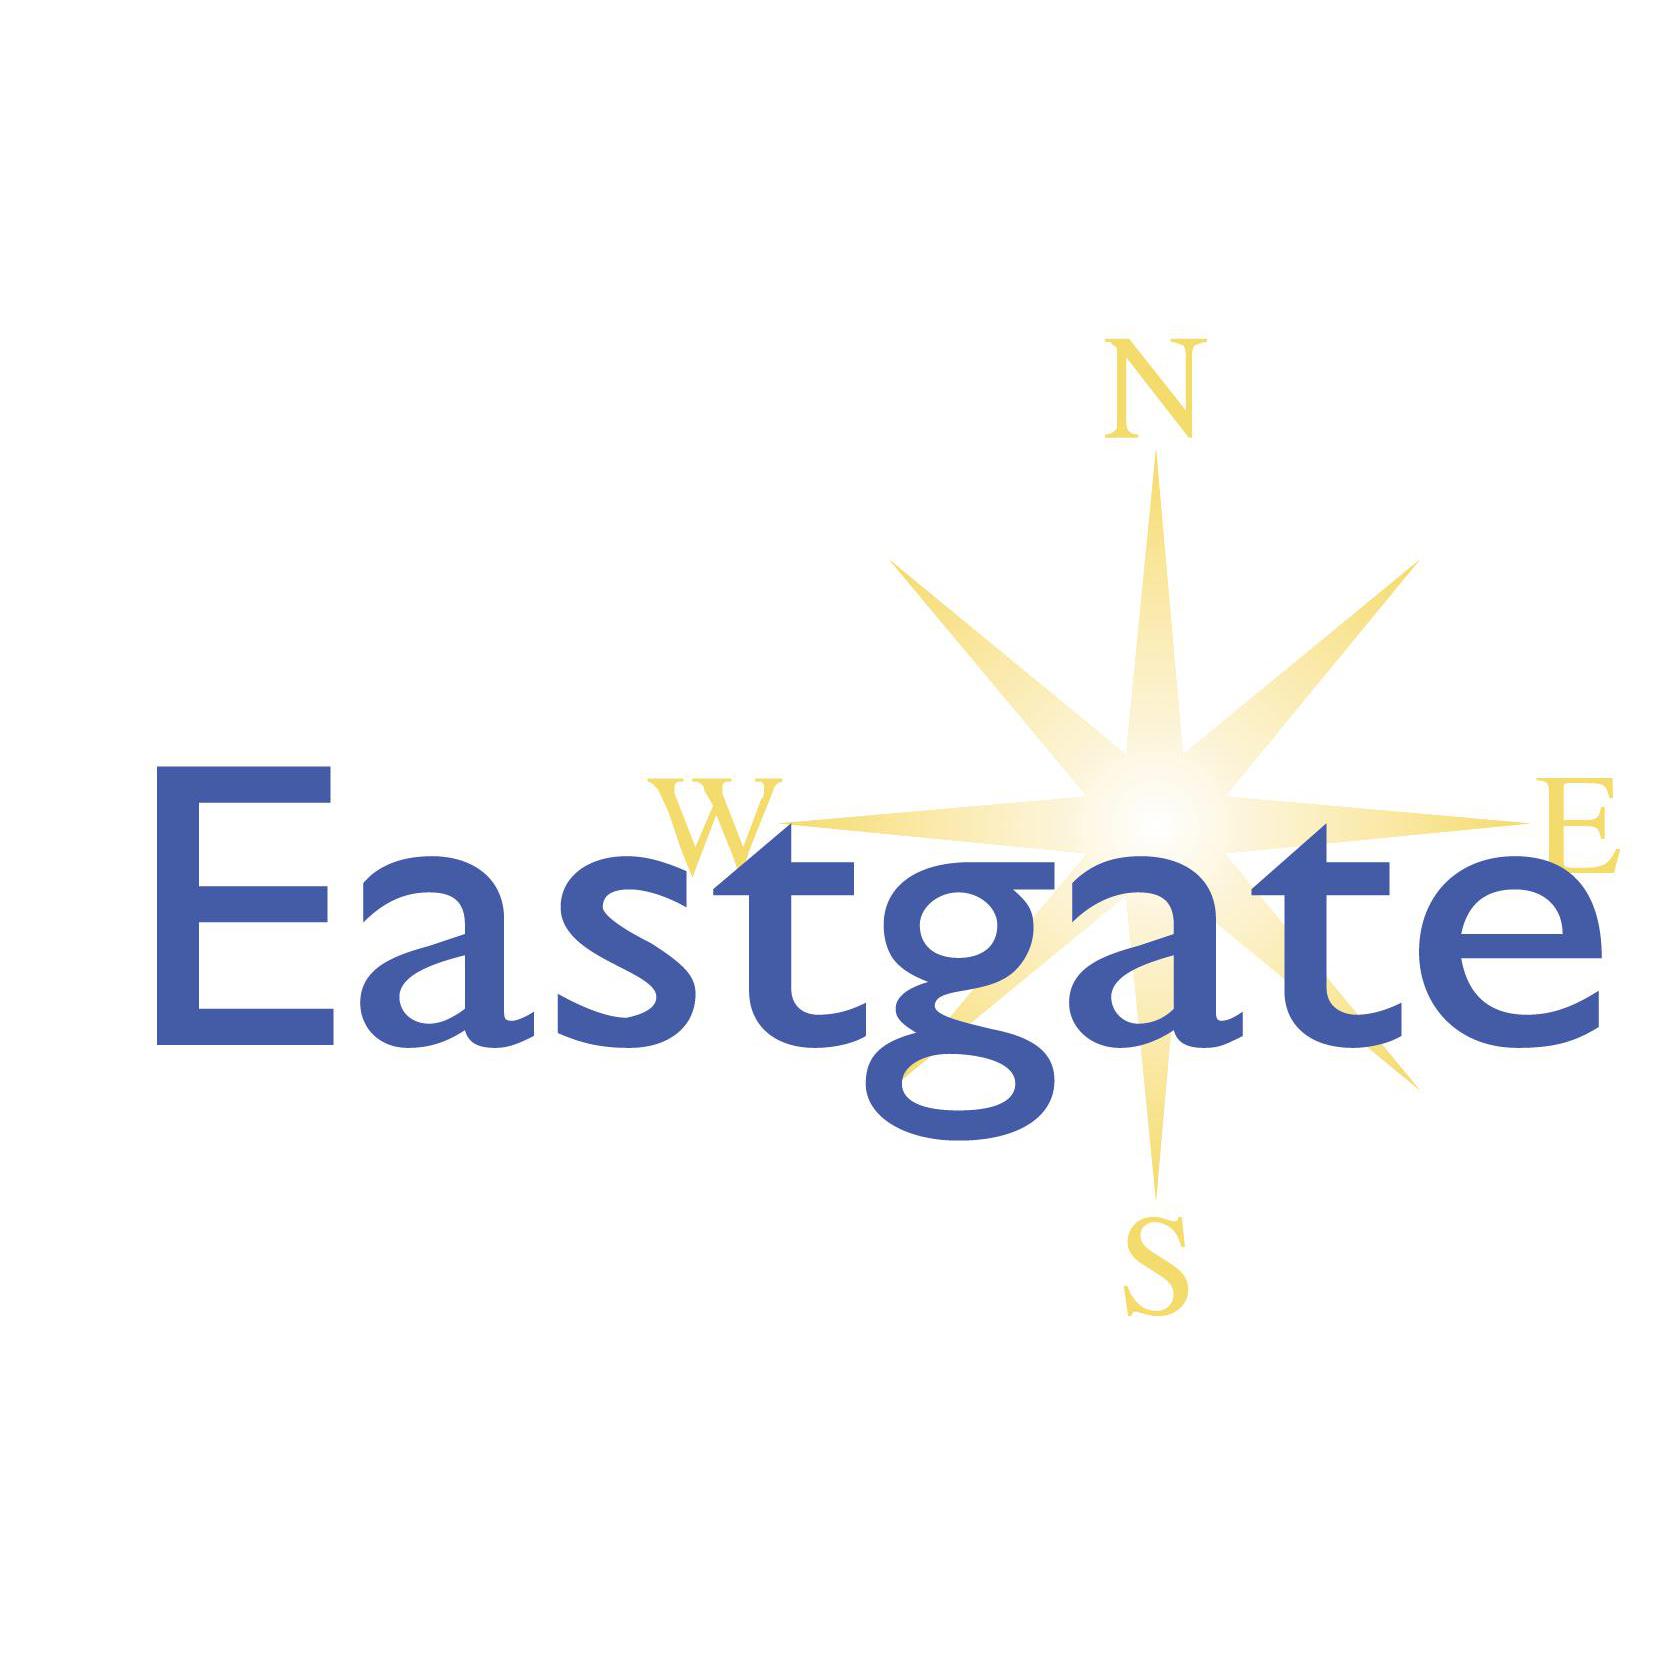 Eastgate Vets, Bury - Bury St. Edmunds, Essex IP33 1XW - 01284 753961 | ShowMeLocal.com